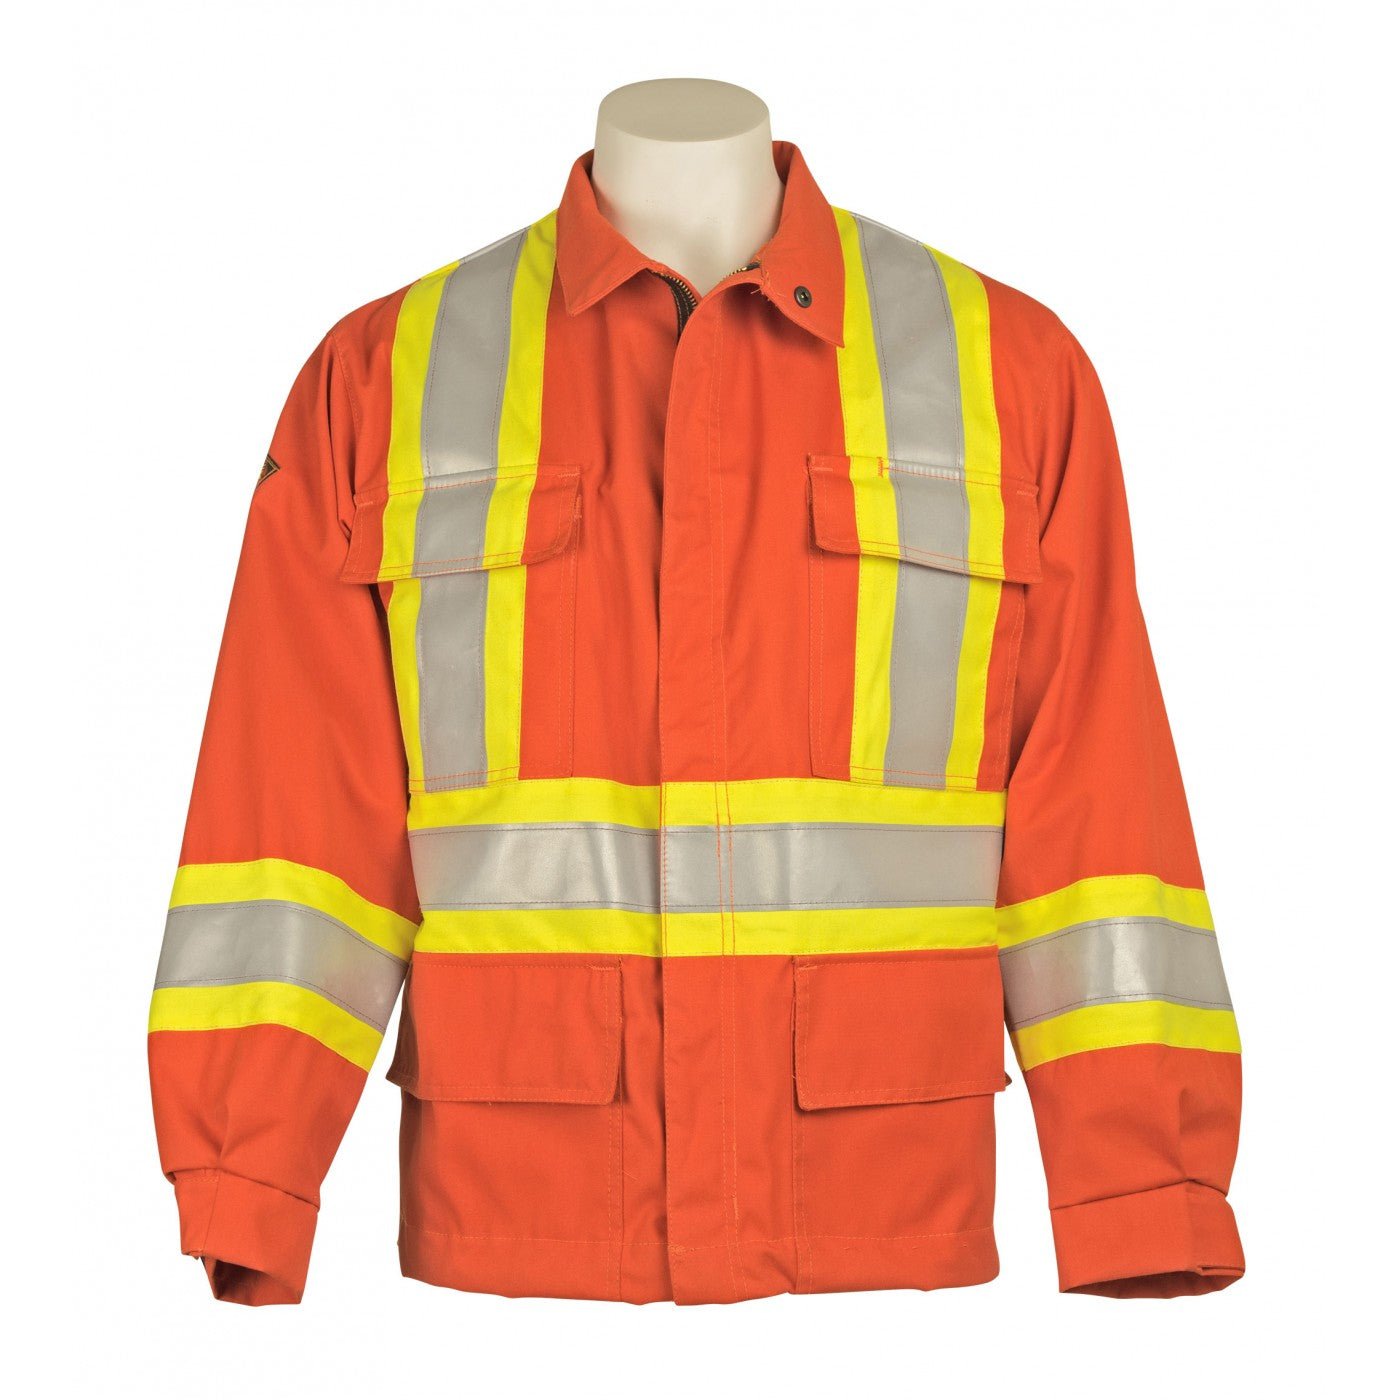 KELTEK 383s Men's Orange CSA Flame Resistant Hi-Vis Unlined Shirt Jacket | S-5XL (HRC 2)